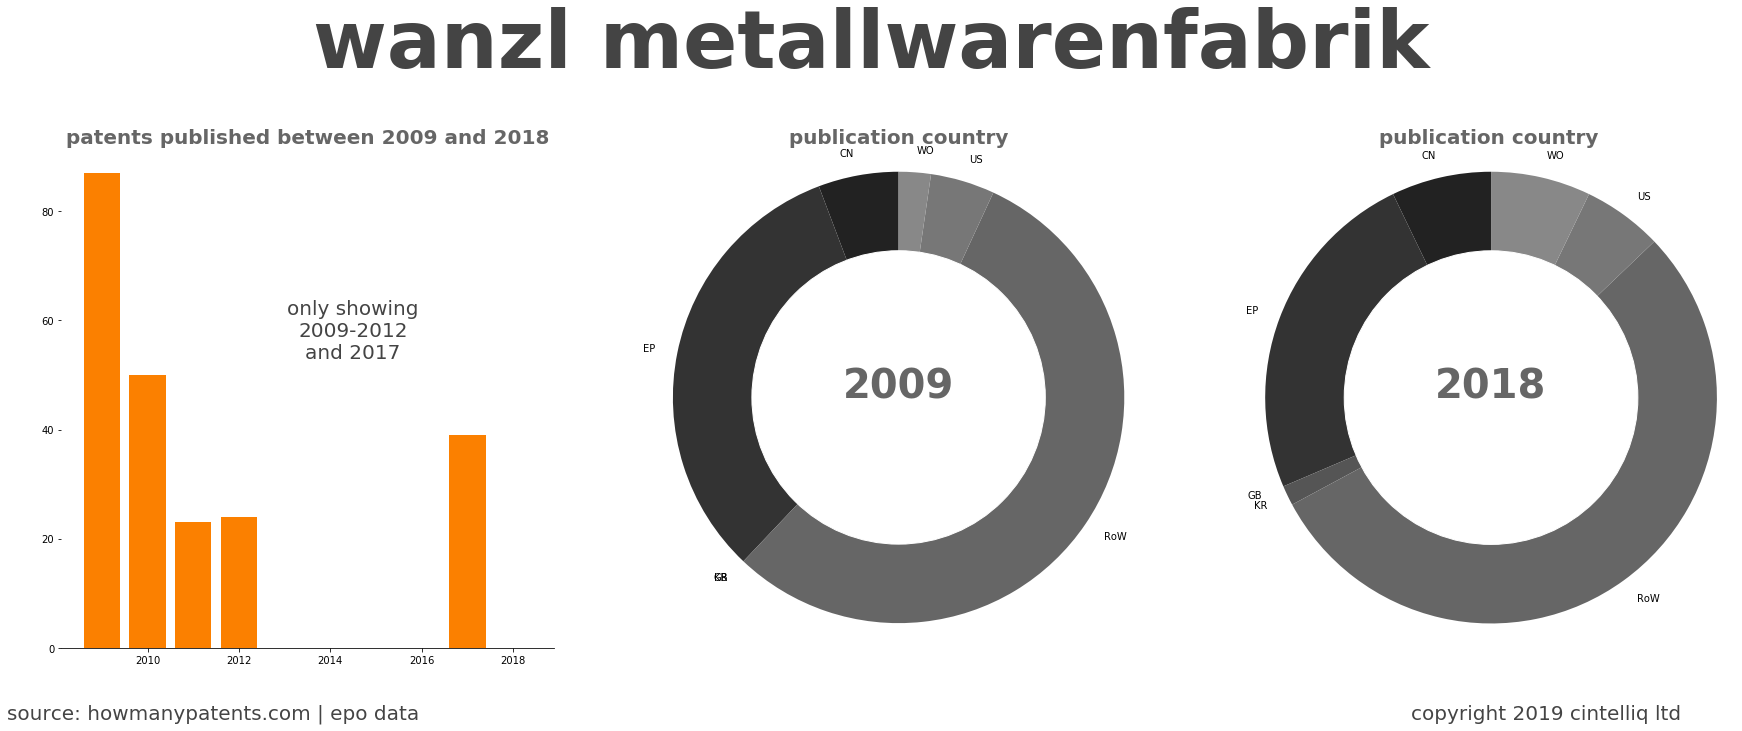 summary of patents for Wanzl Metallwarenfabrik